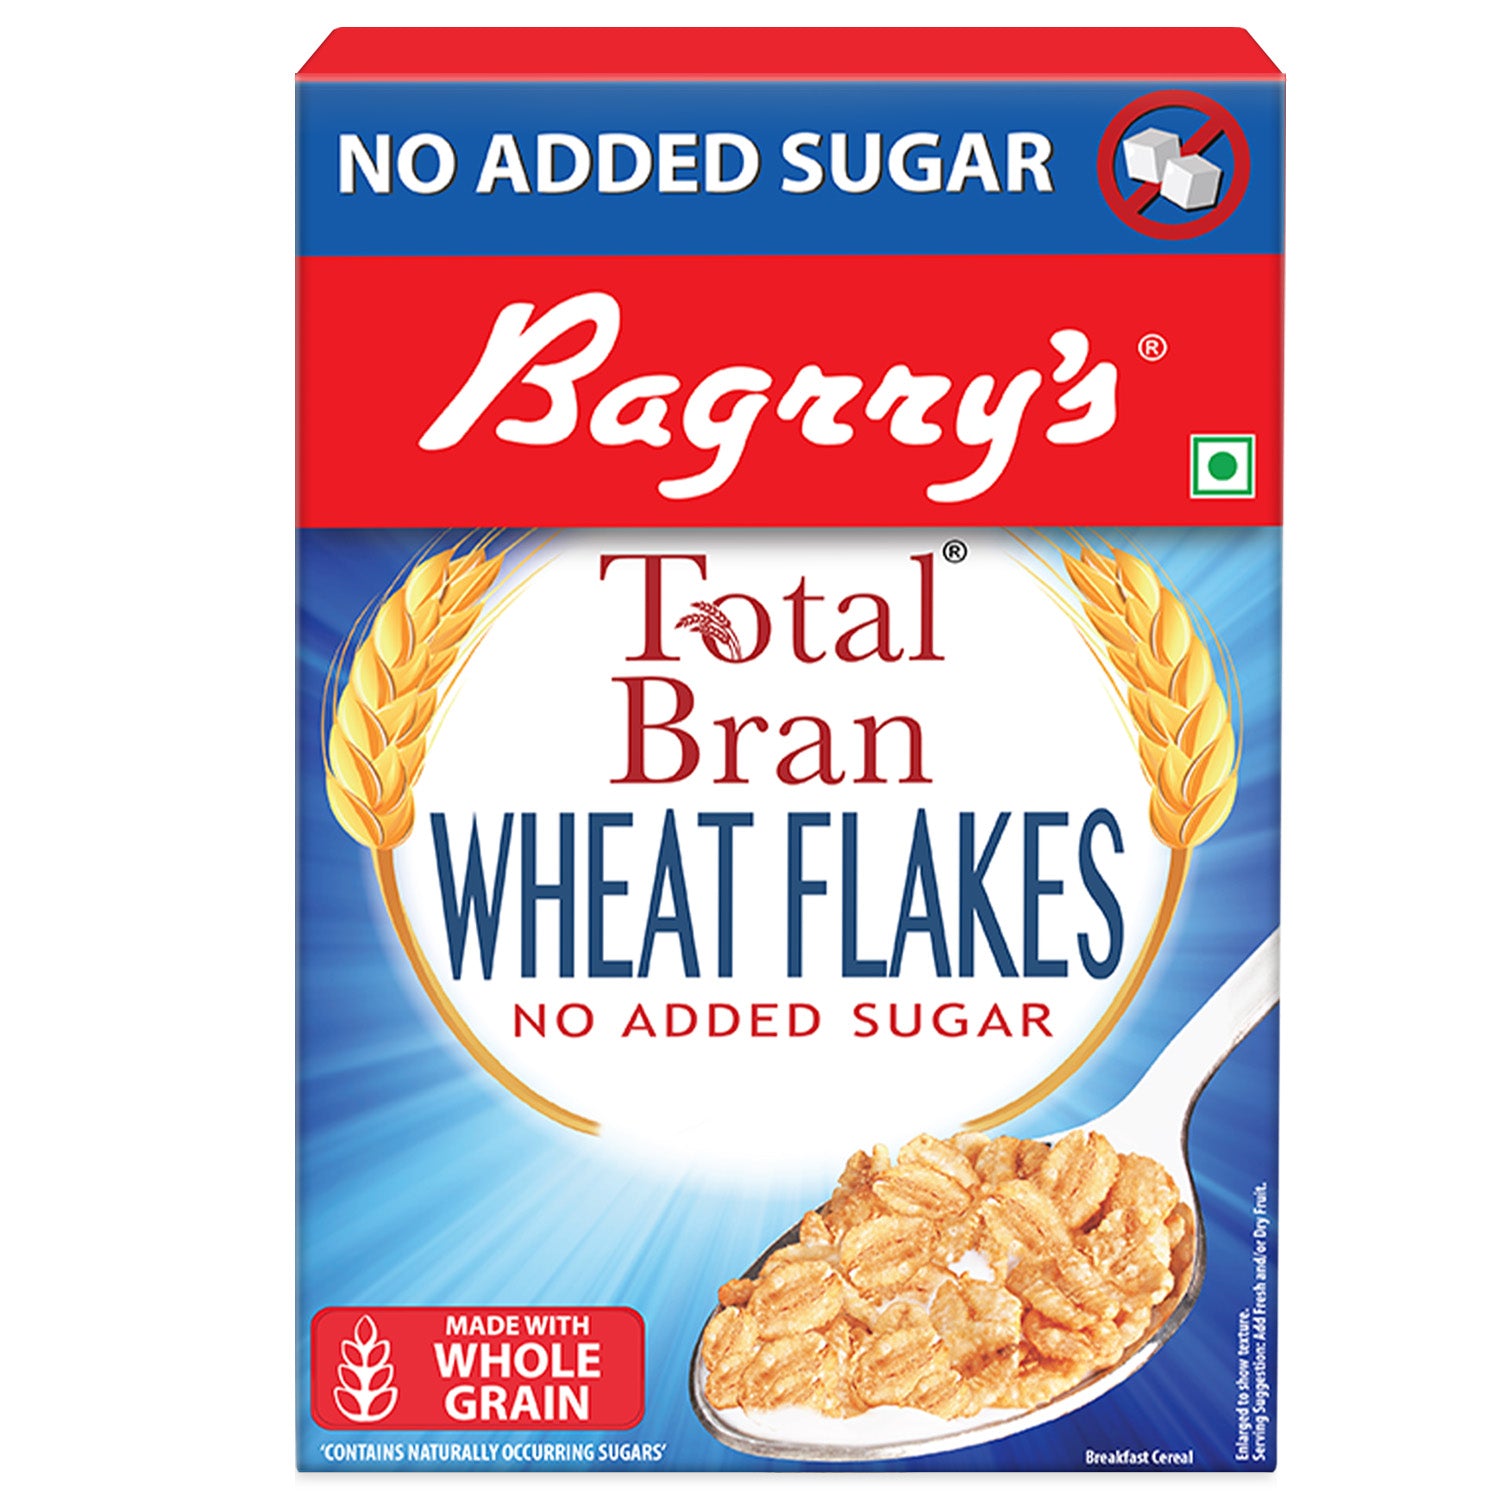 Total Bran Wheat Flakes - No Added Sugar